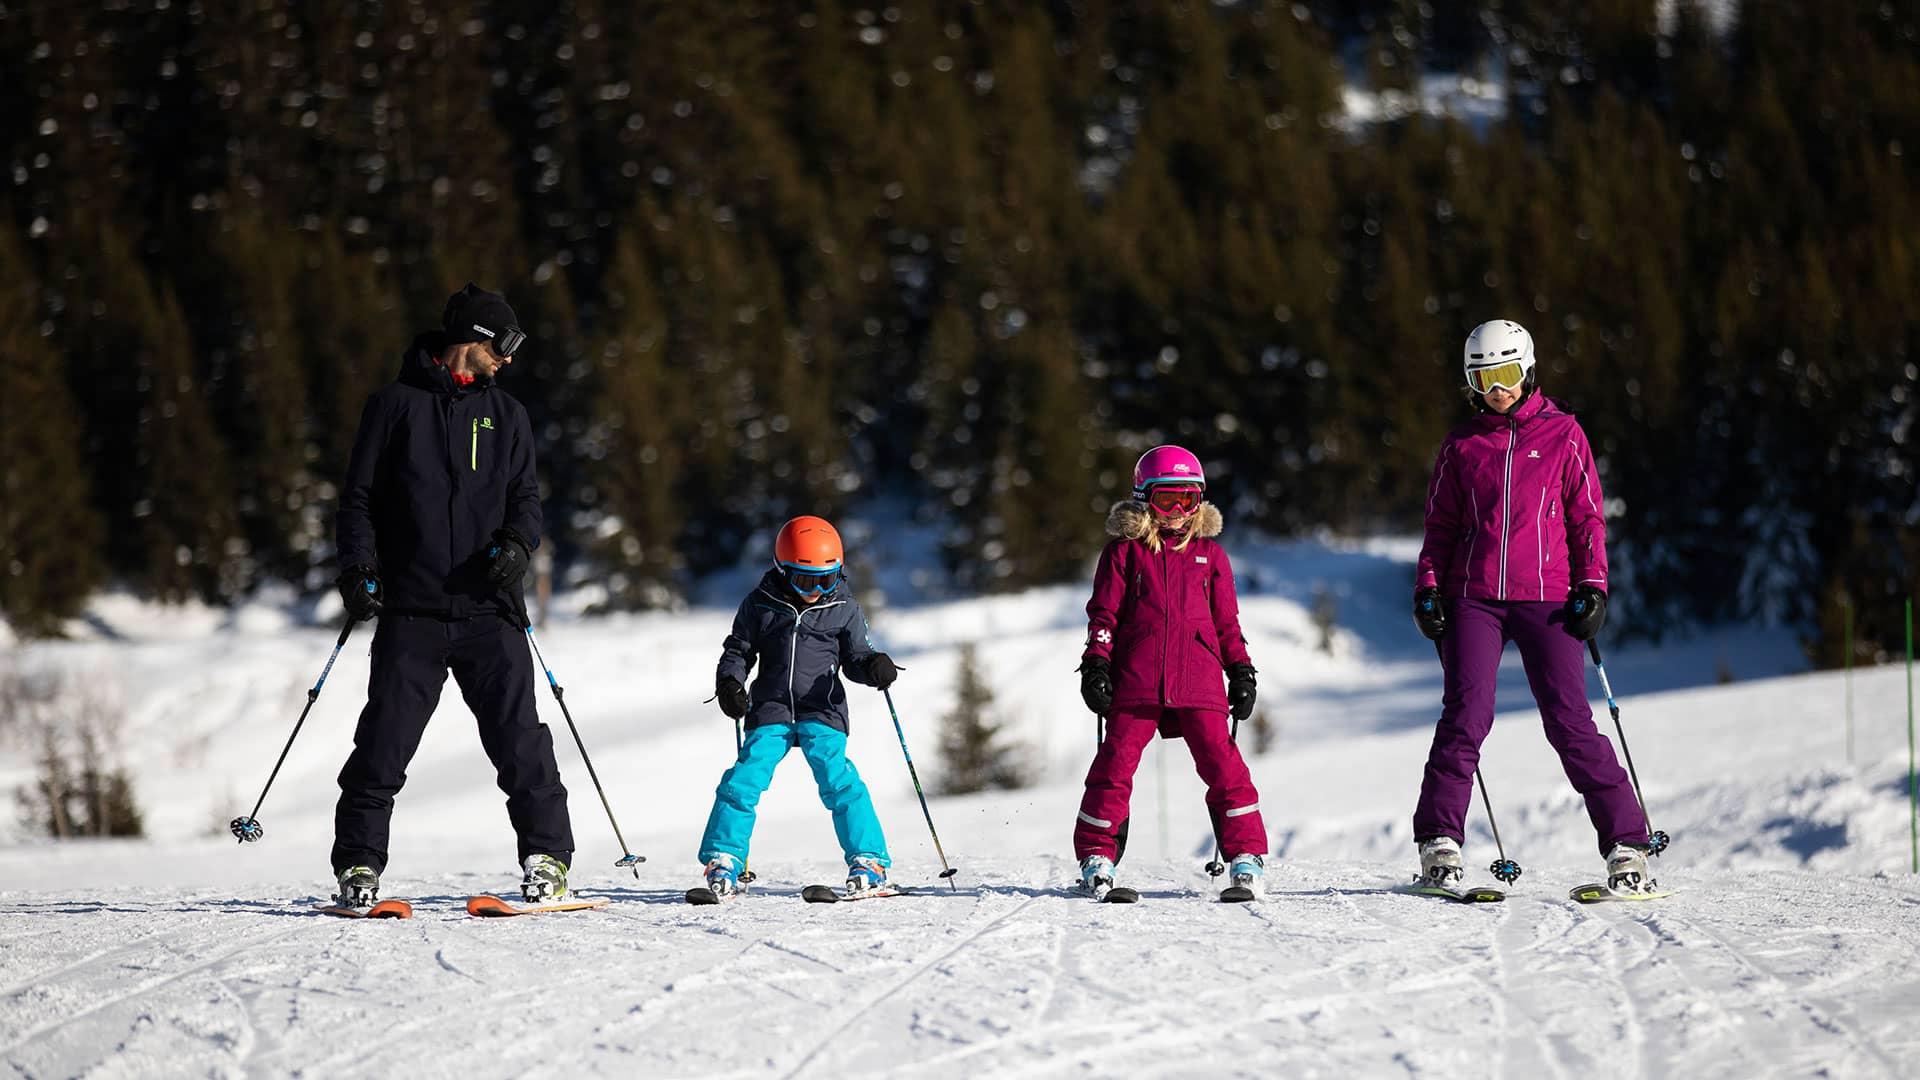 Family-friendly skiing